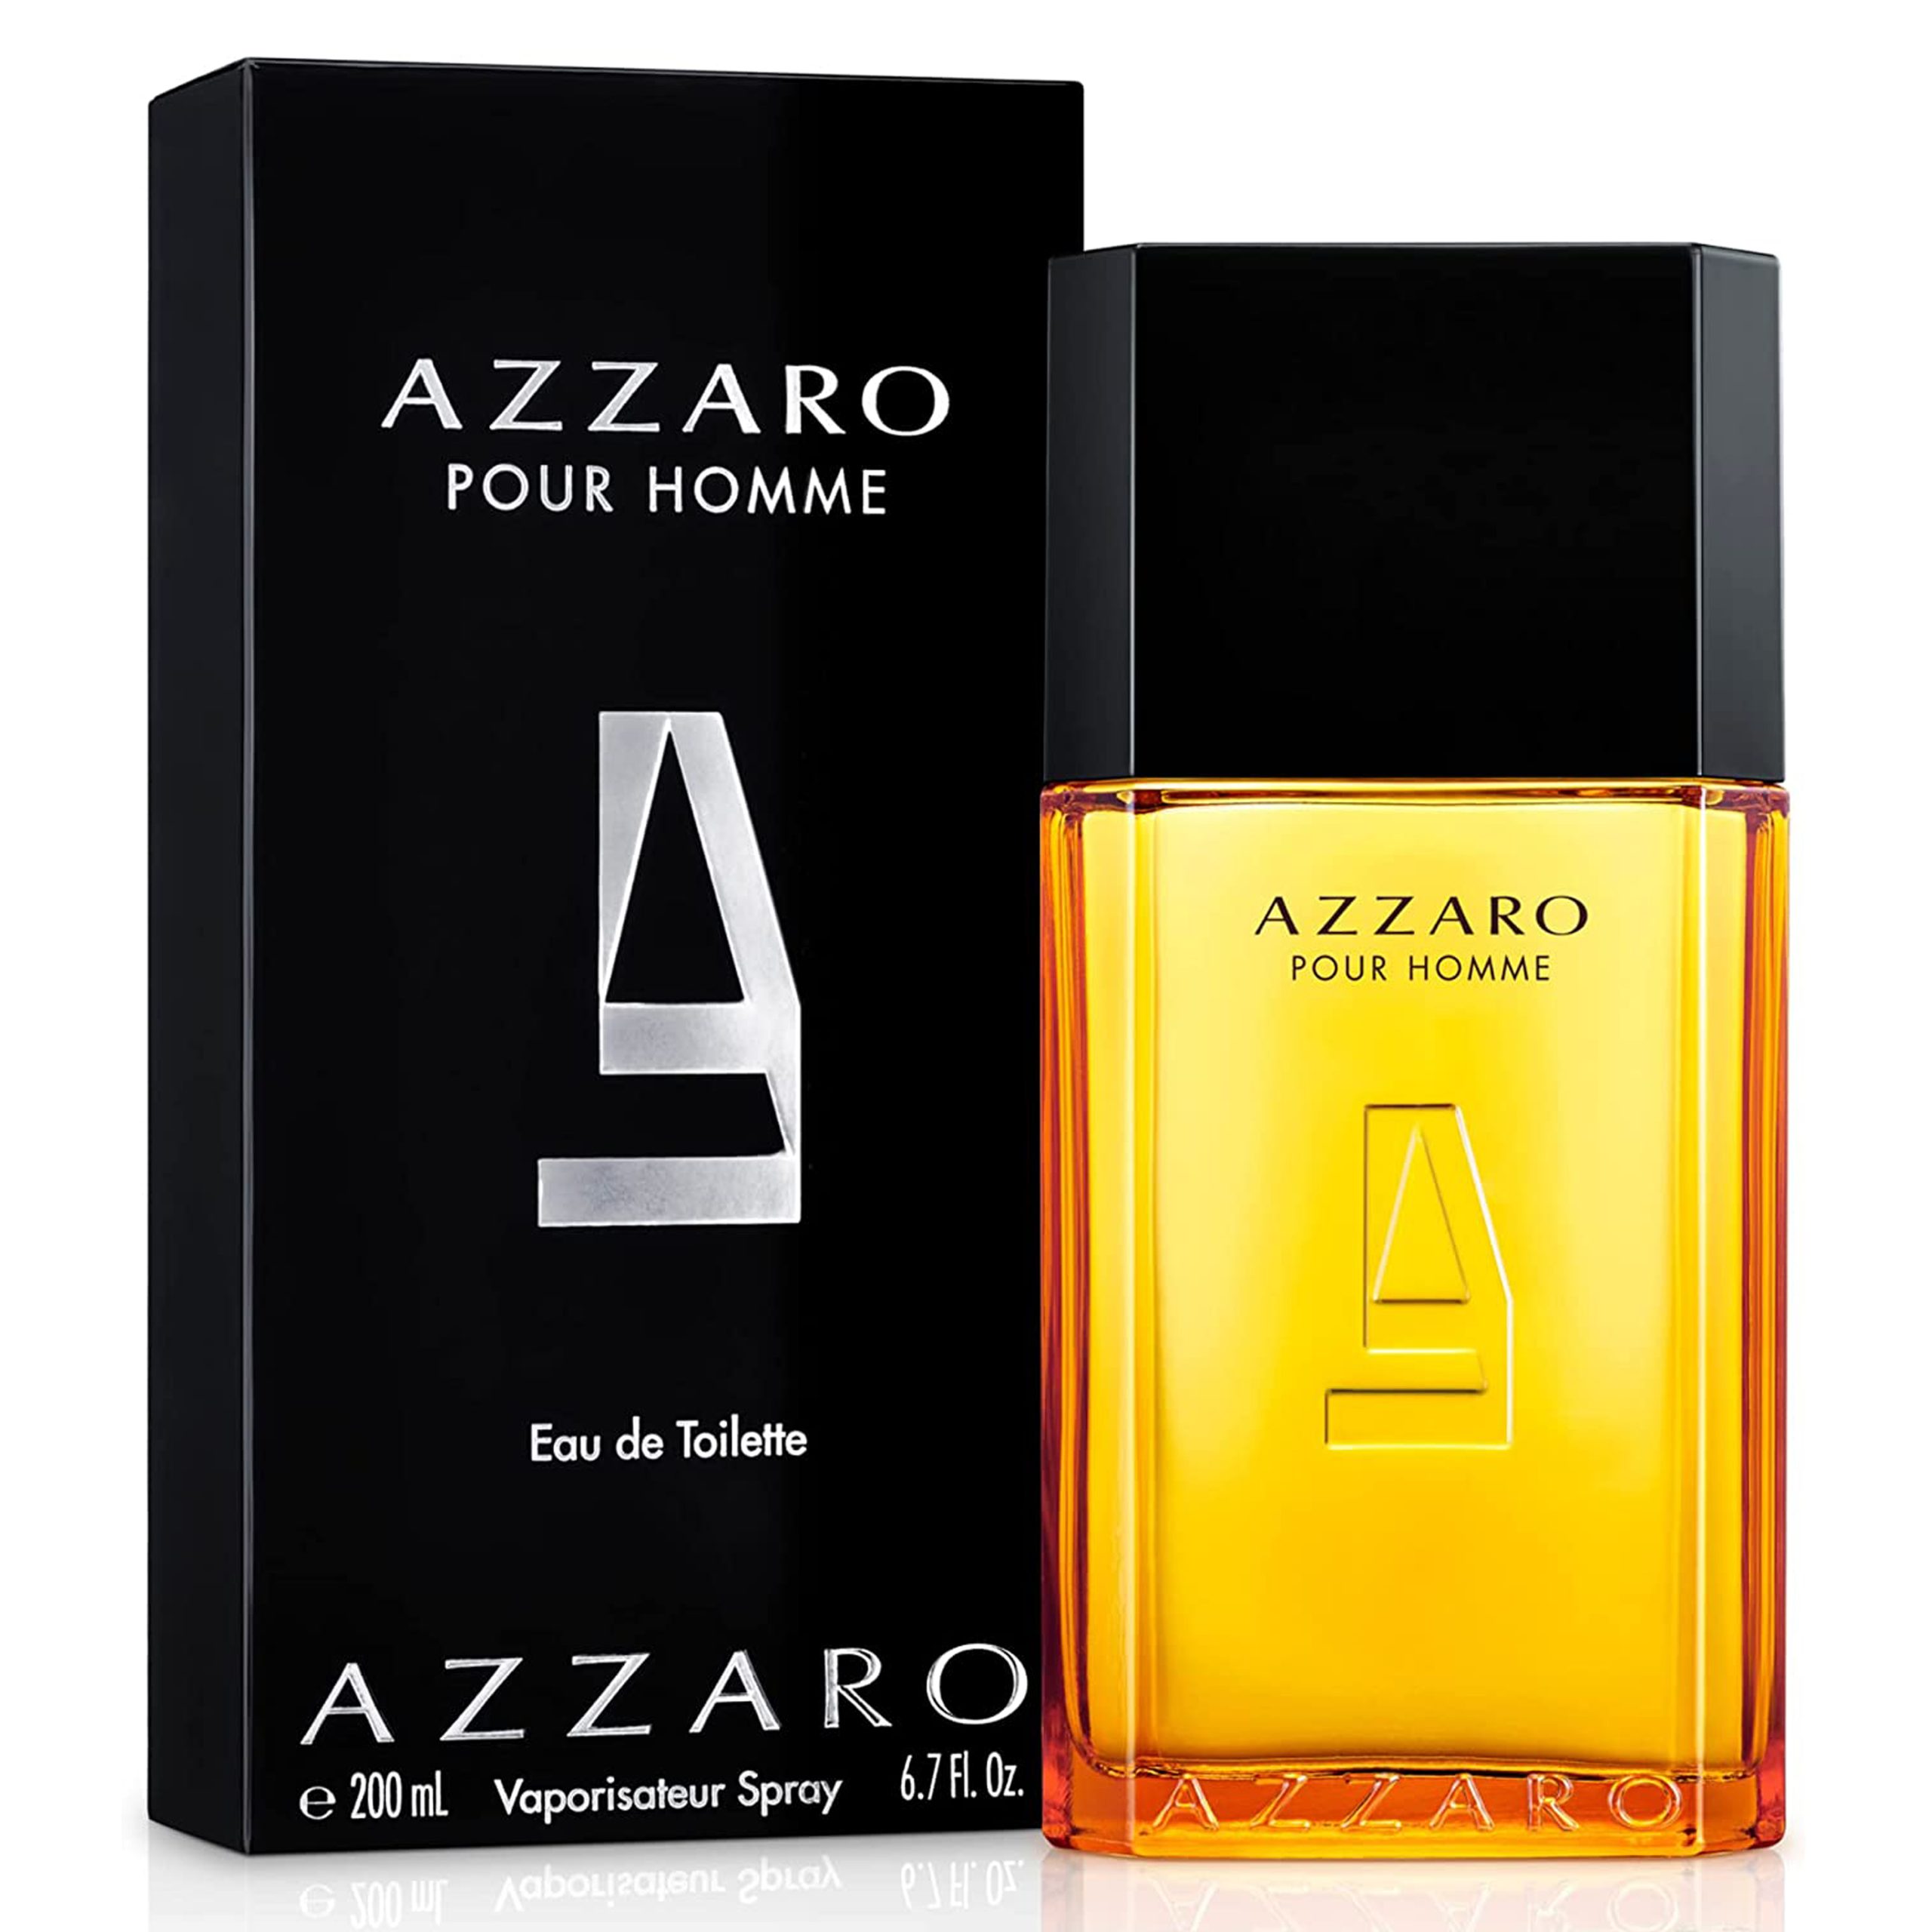 ادکلن مردانه آزارو پورهوم Azzaro Pour Homme – perfume for men